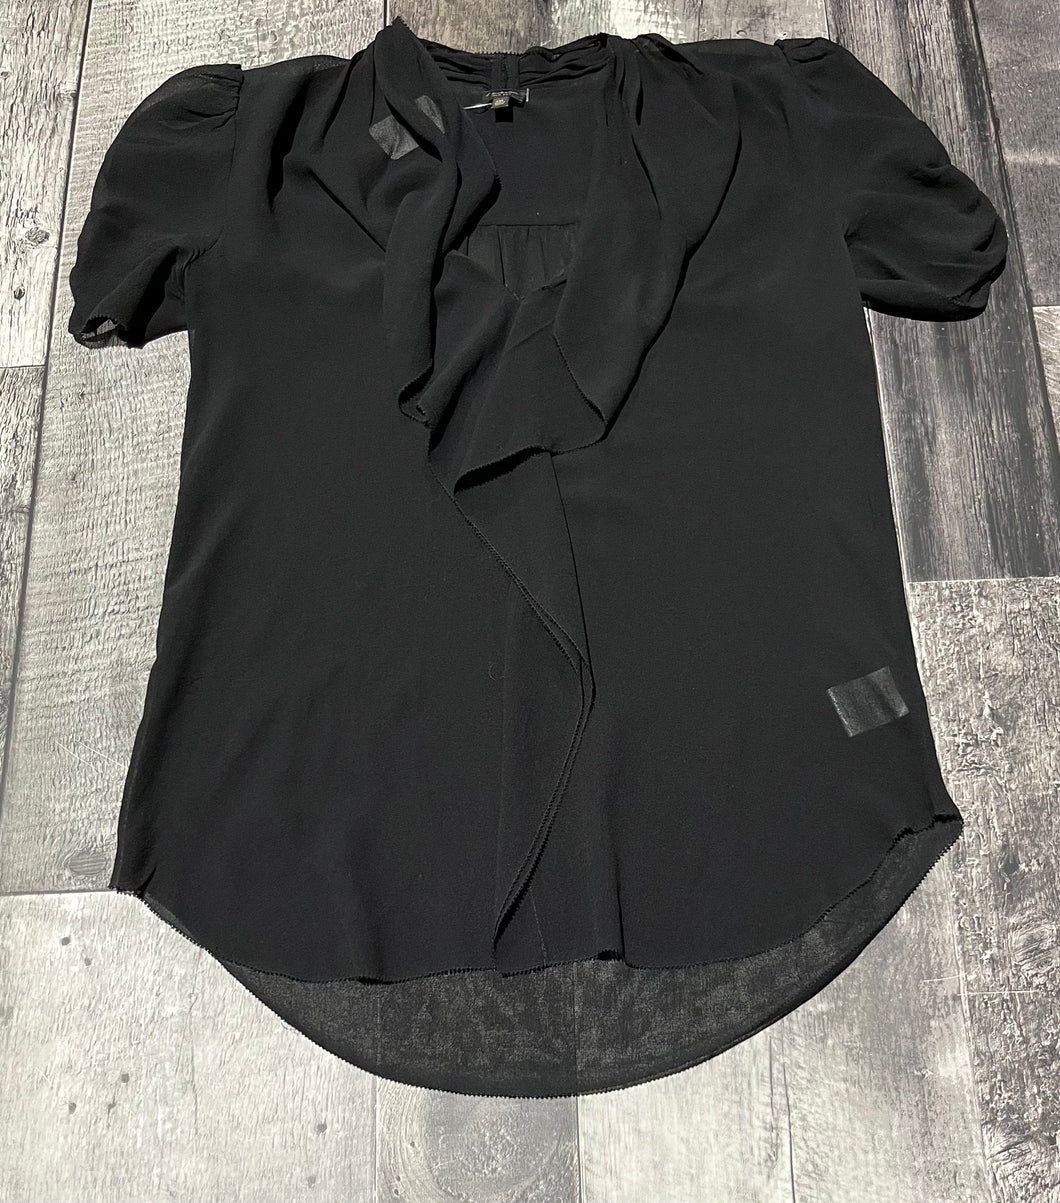 Babaton black sheer blouse - Hers size XXS